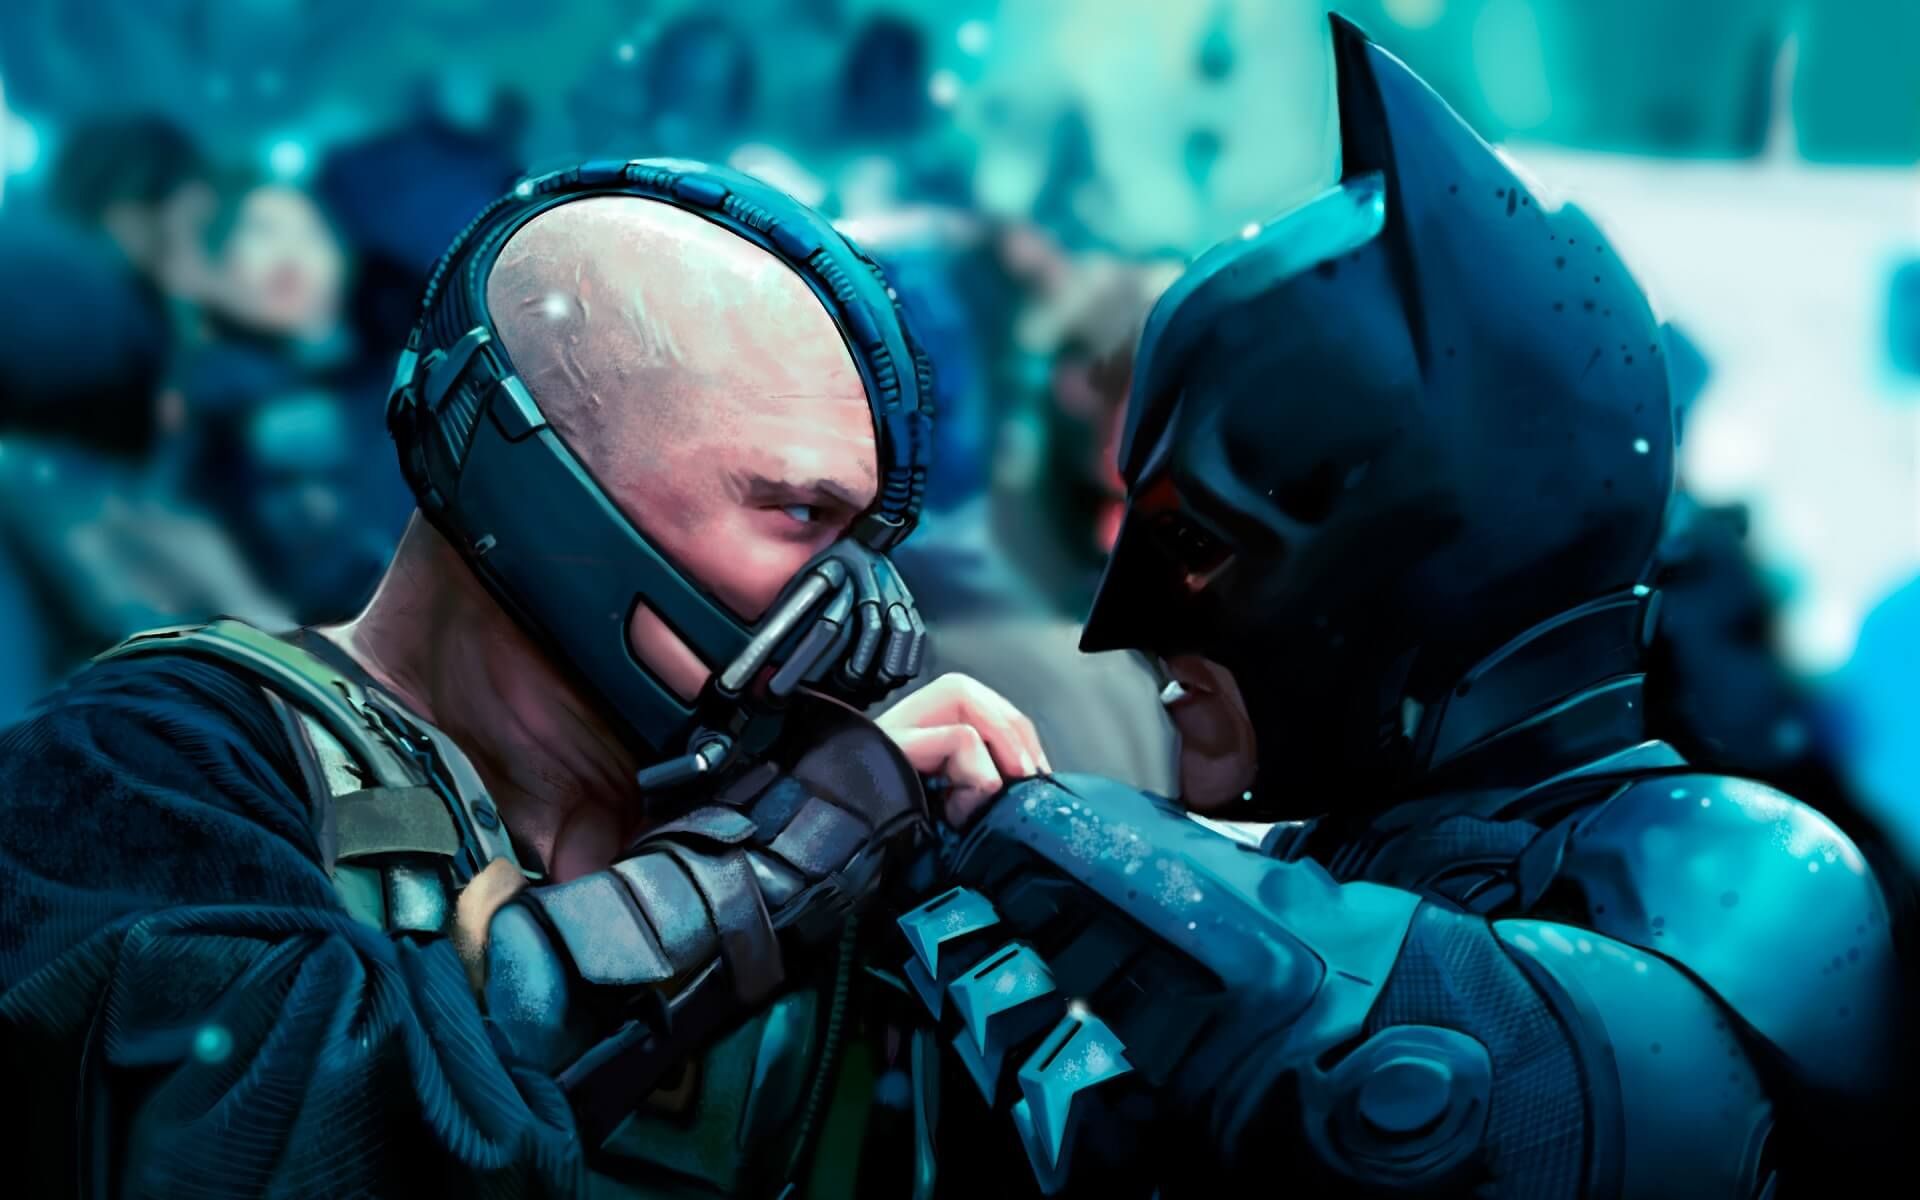 The Dark Knight turns 10: Revisiting Christopher Nolan's Batman hit